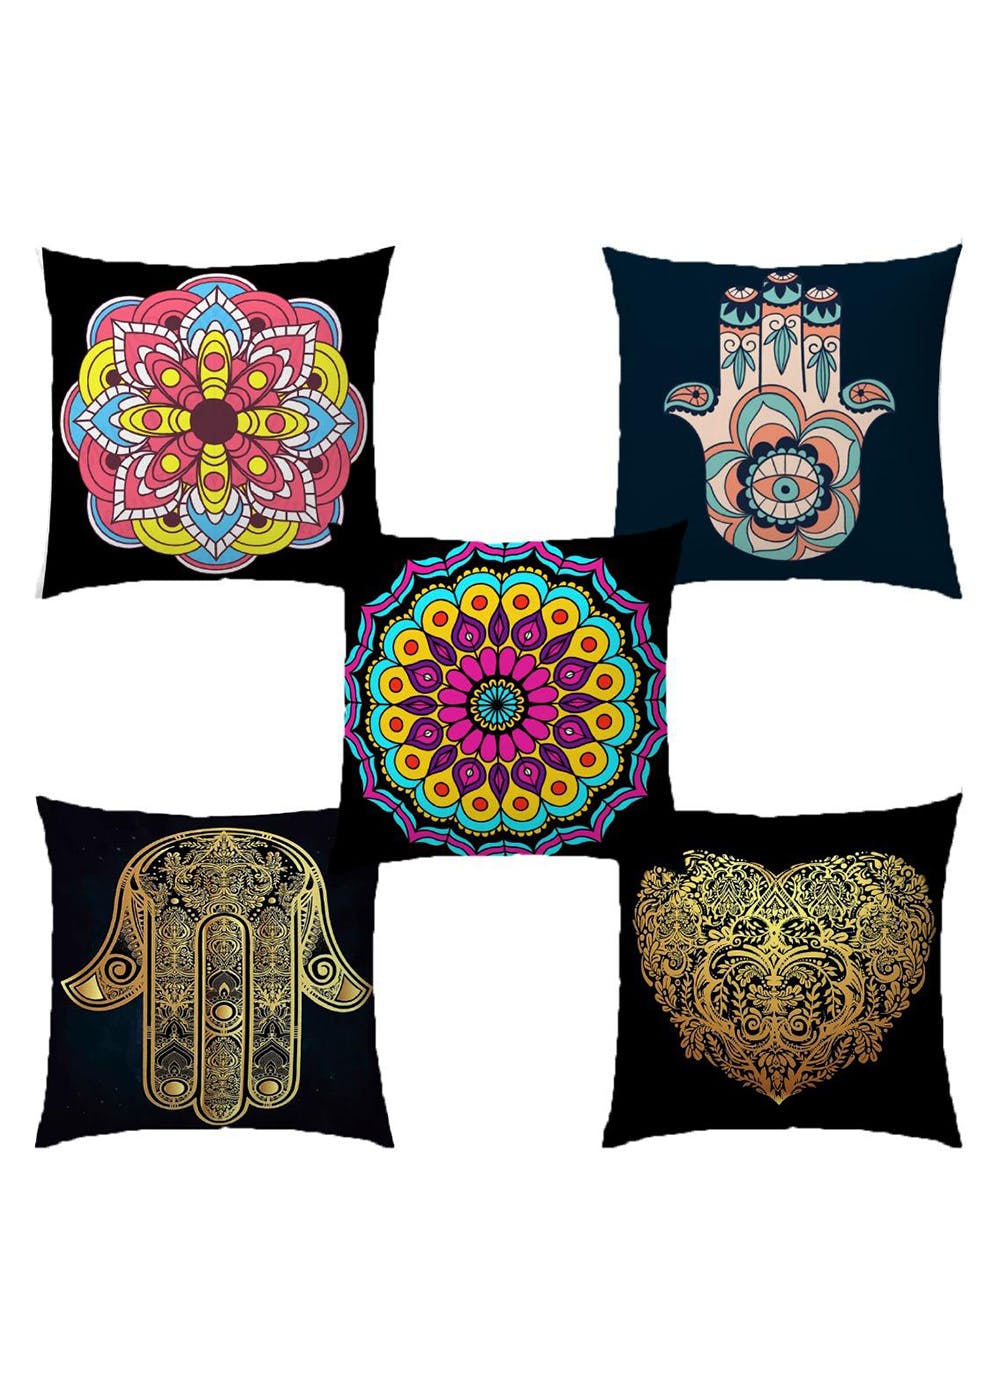 Get Pack of 5 Black Mandala Printed Cushion Cover at ₹ 600 | LBB Shop